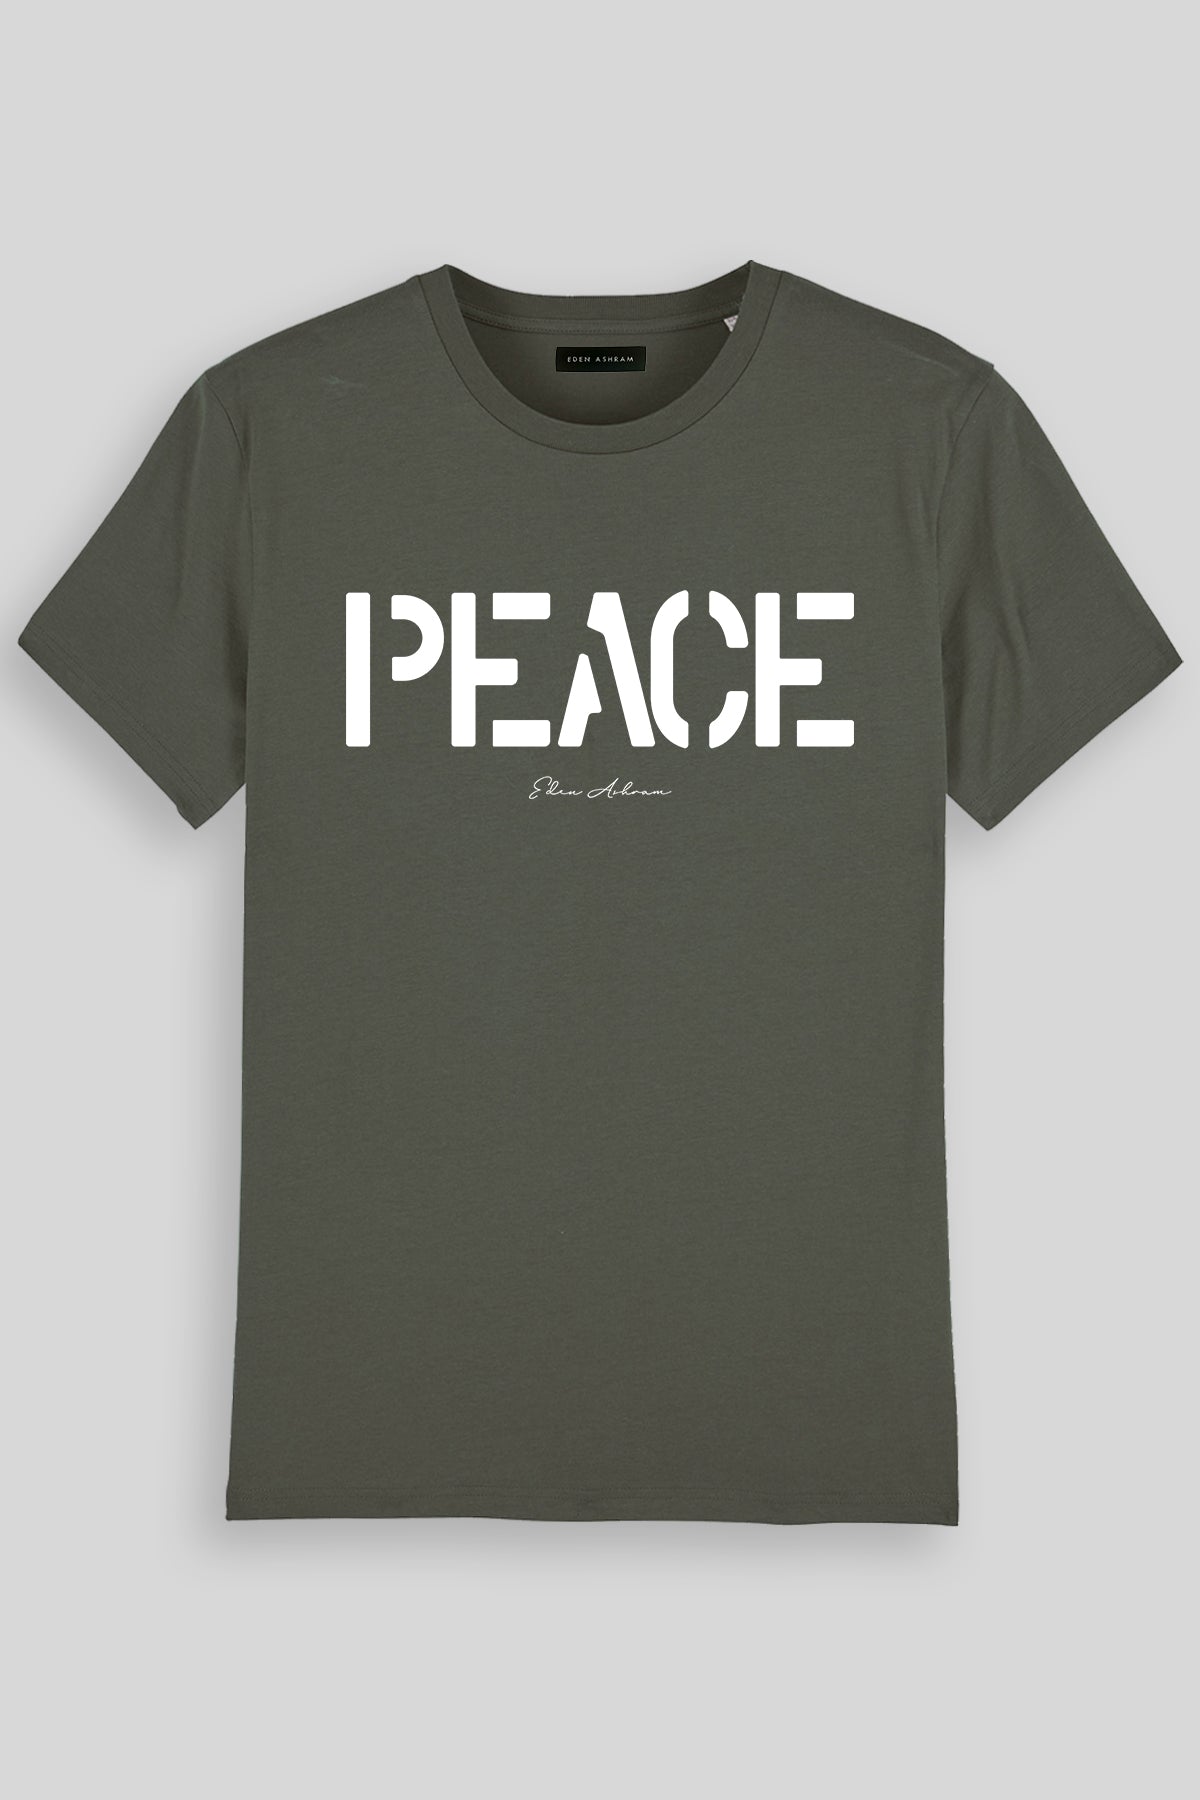 EDEN ASHRAM PEACE - Premium Classic T-Shirt Khaki